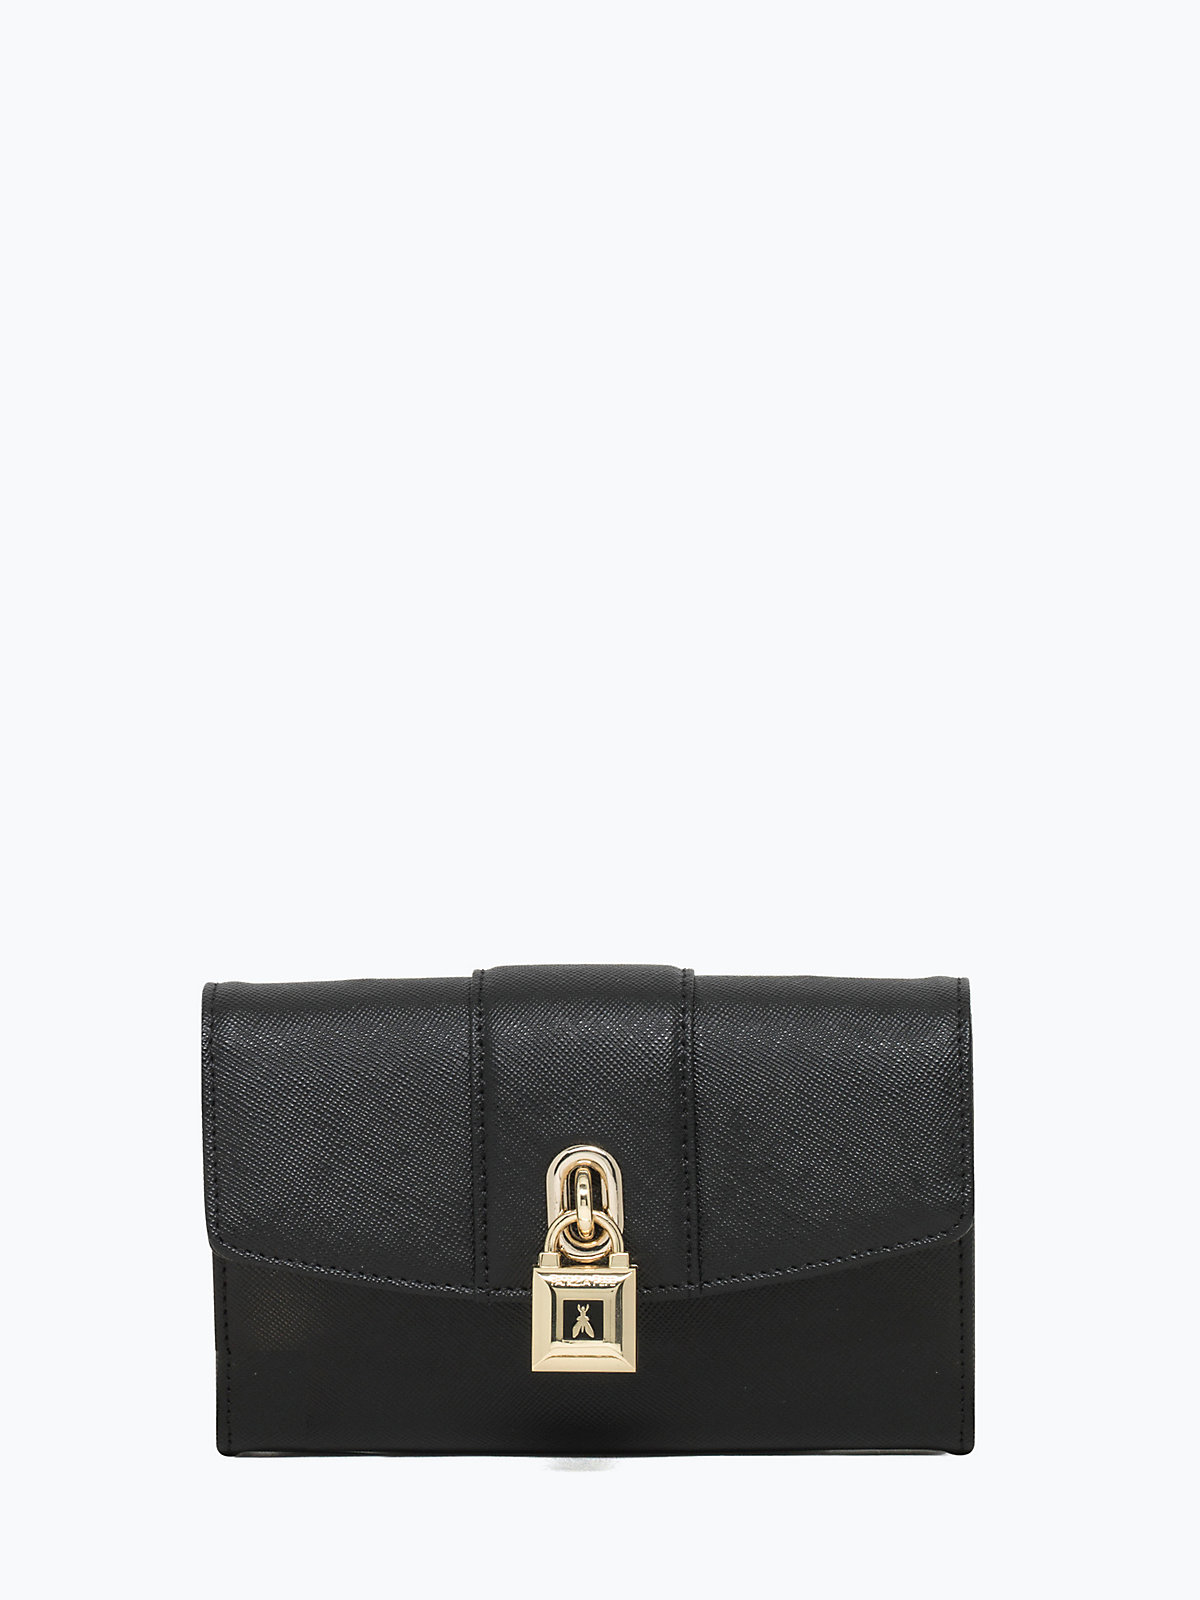 Patrizia pepe Mini Clutch Bag In Leather With Shoulder Strap in Black (Black / Orange) | Lyst